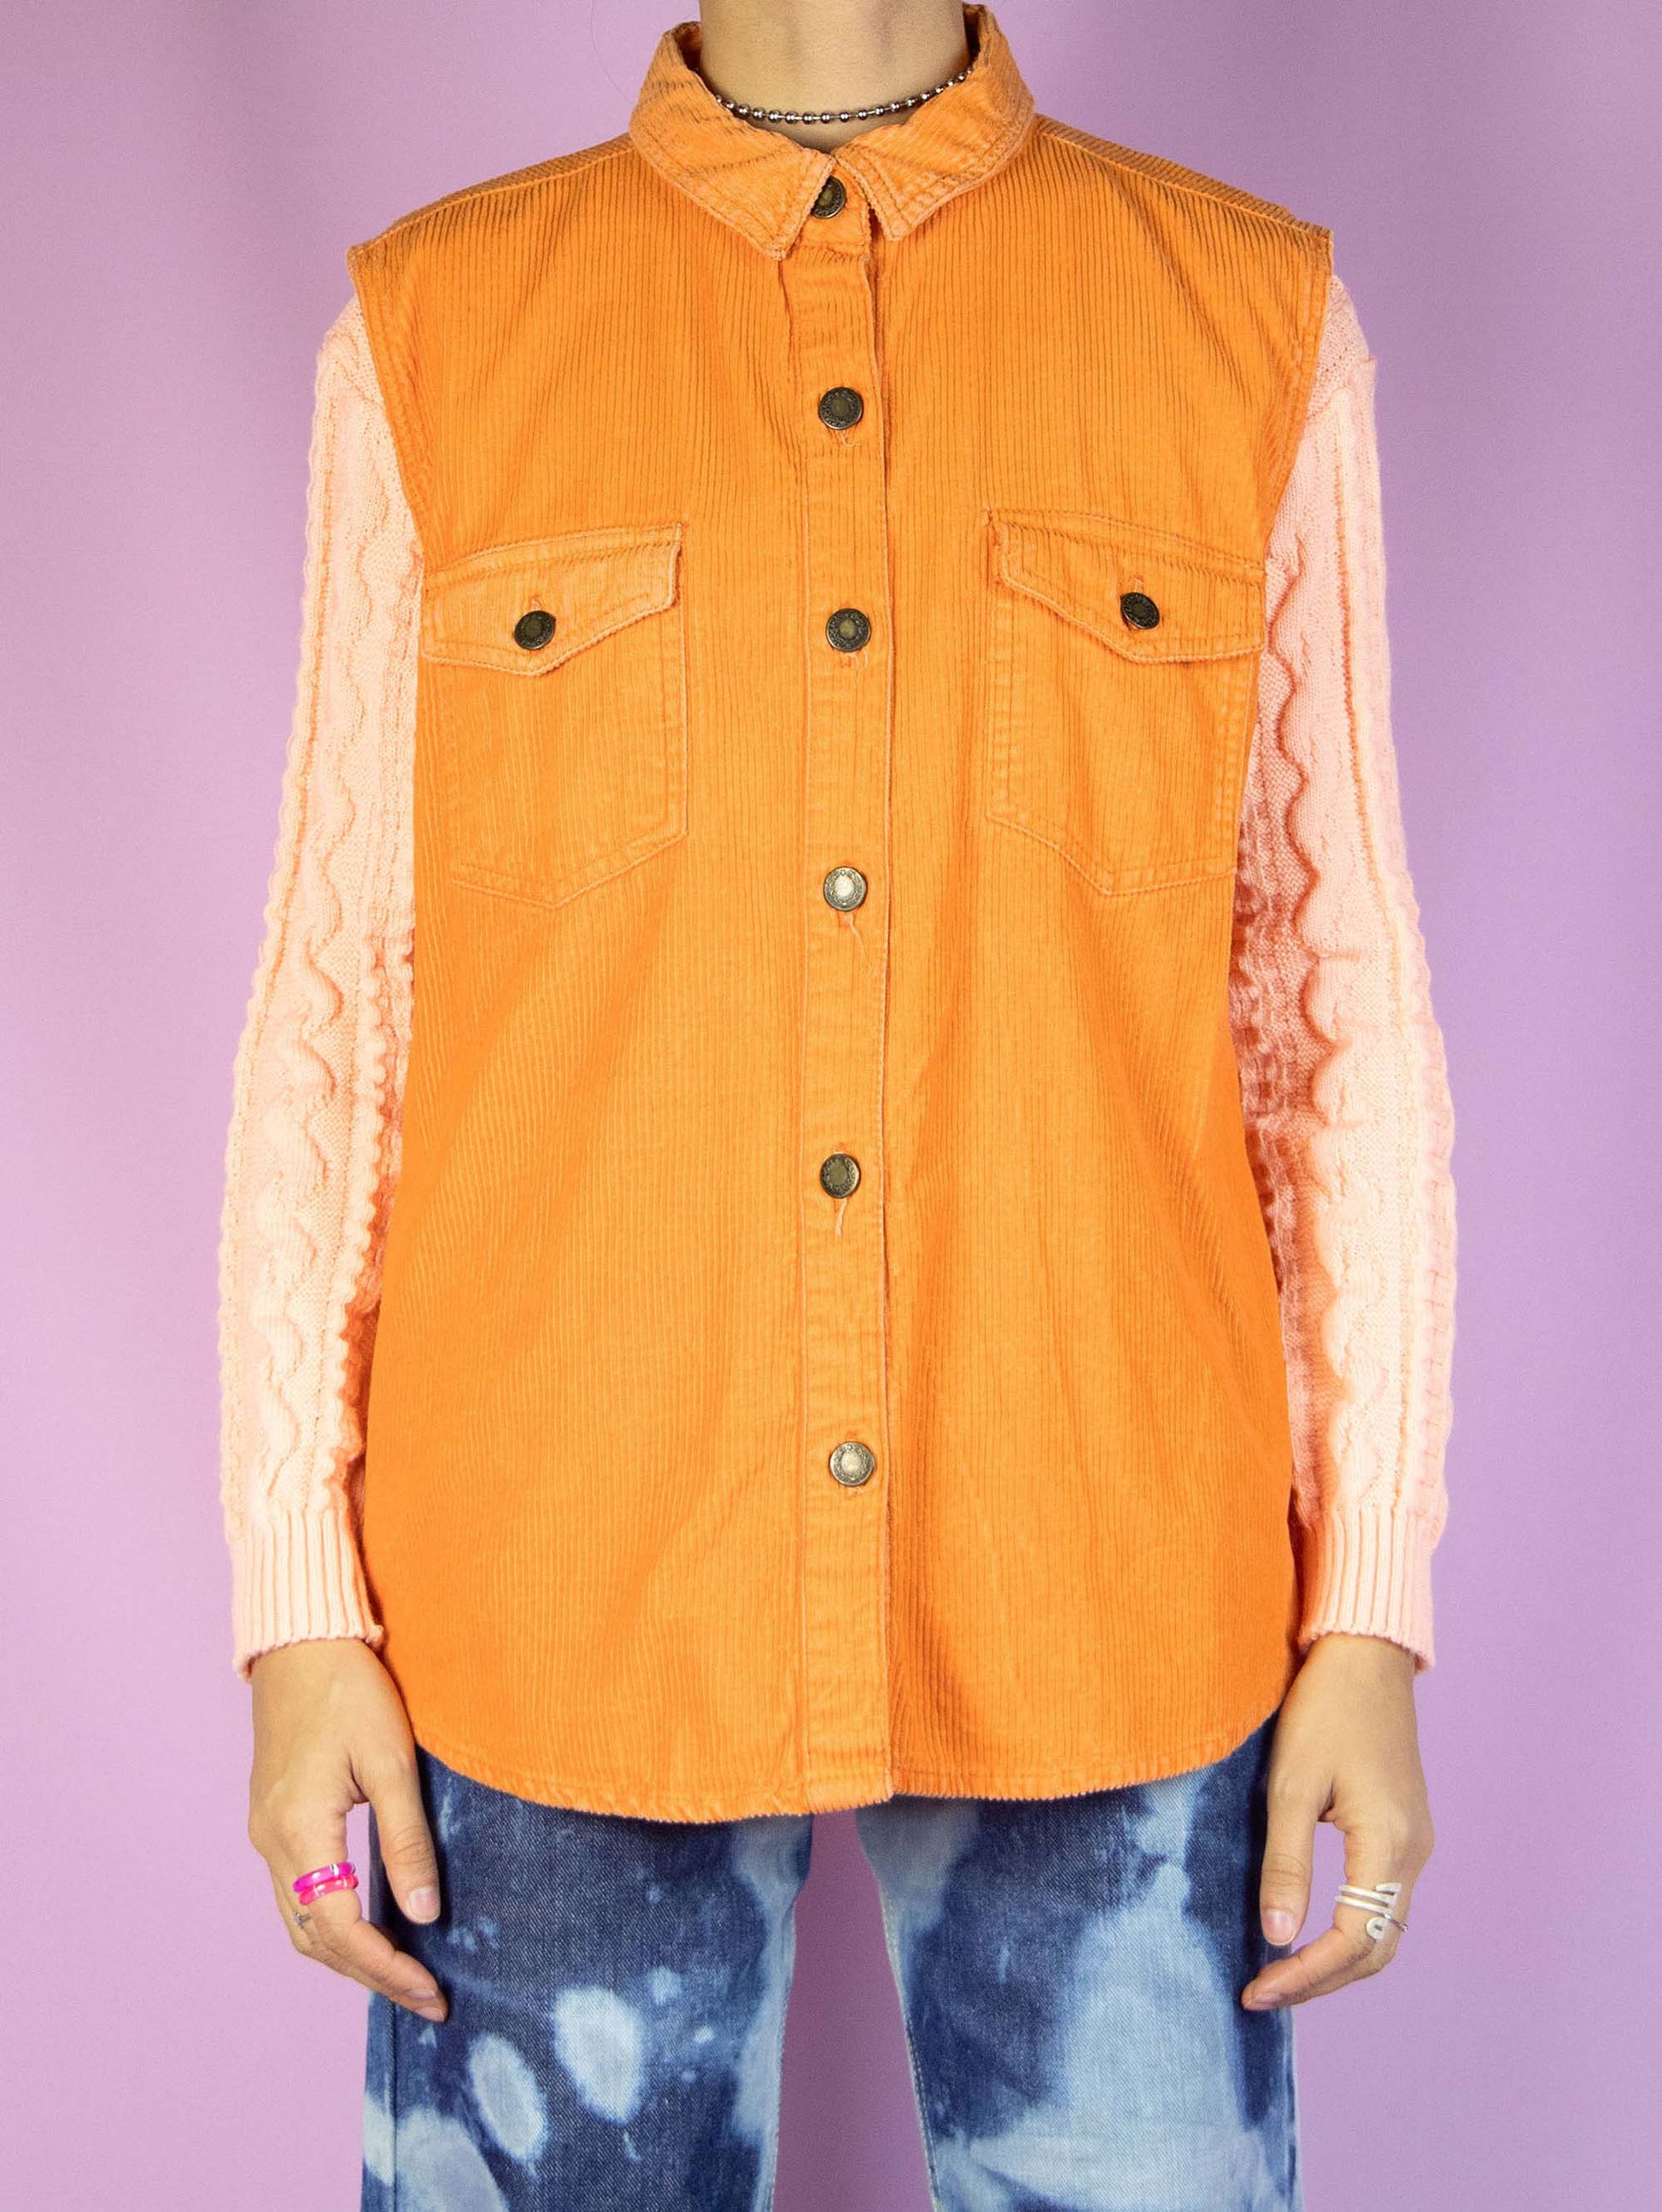 The Vintage 90s Orange Corduroy Vest Jacket is an orange corduroy vest with a collar, pockets, and button closure. Retro grunge 1990s utility jacket.